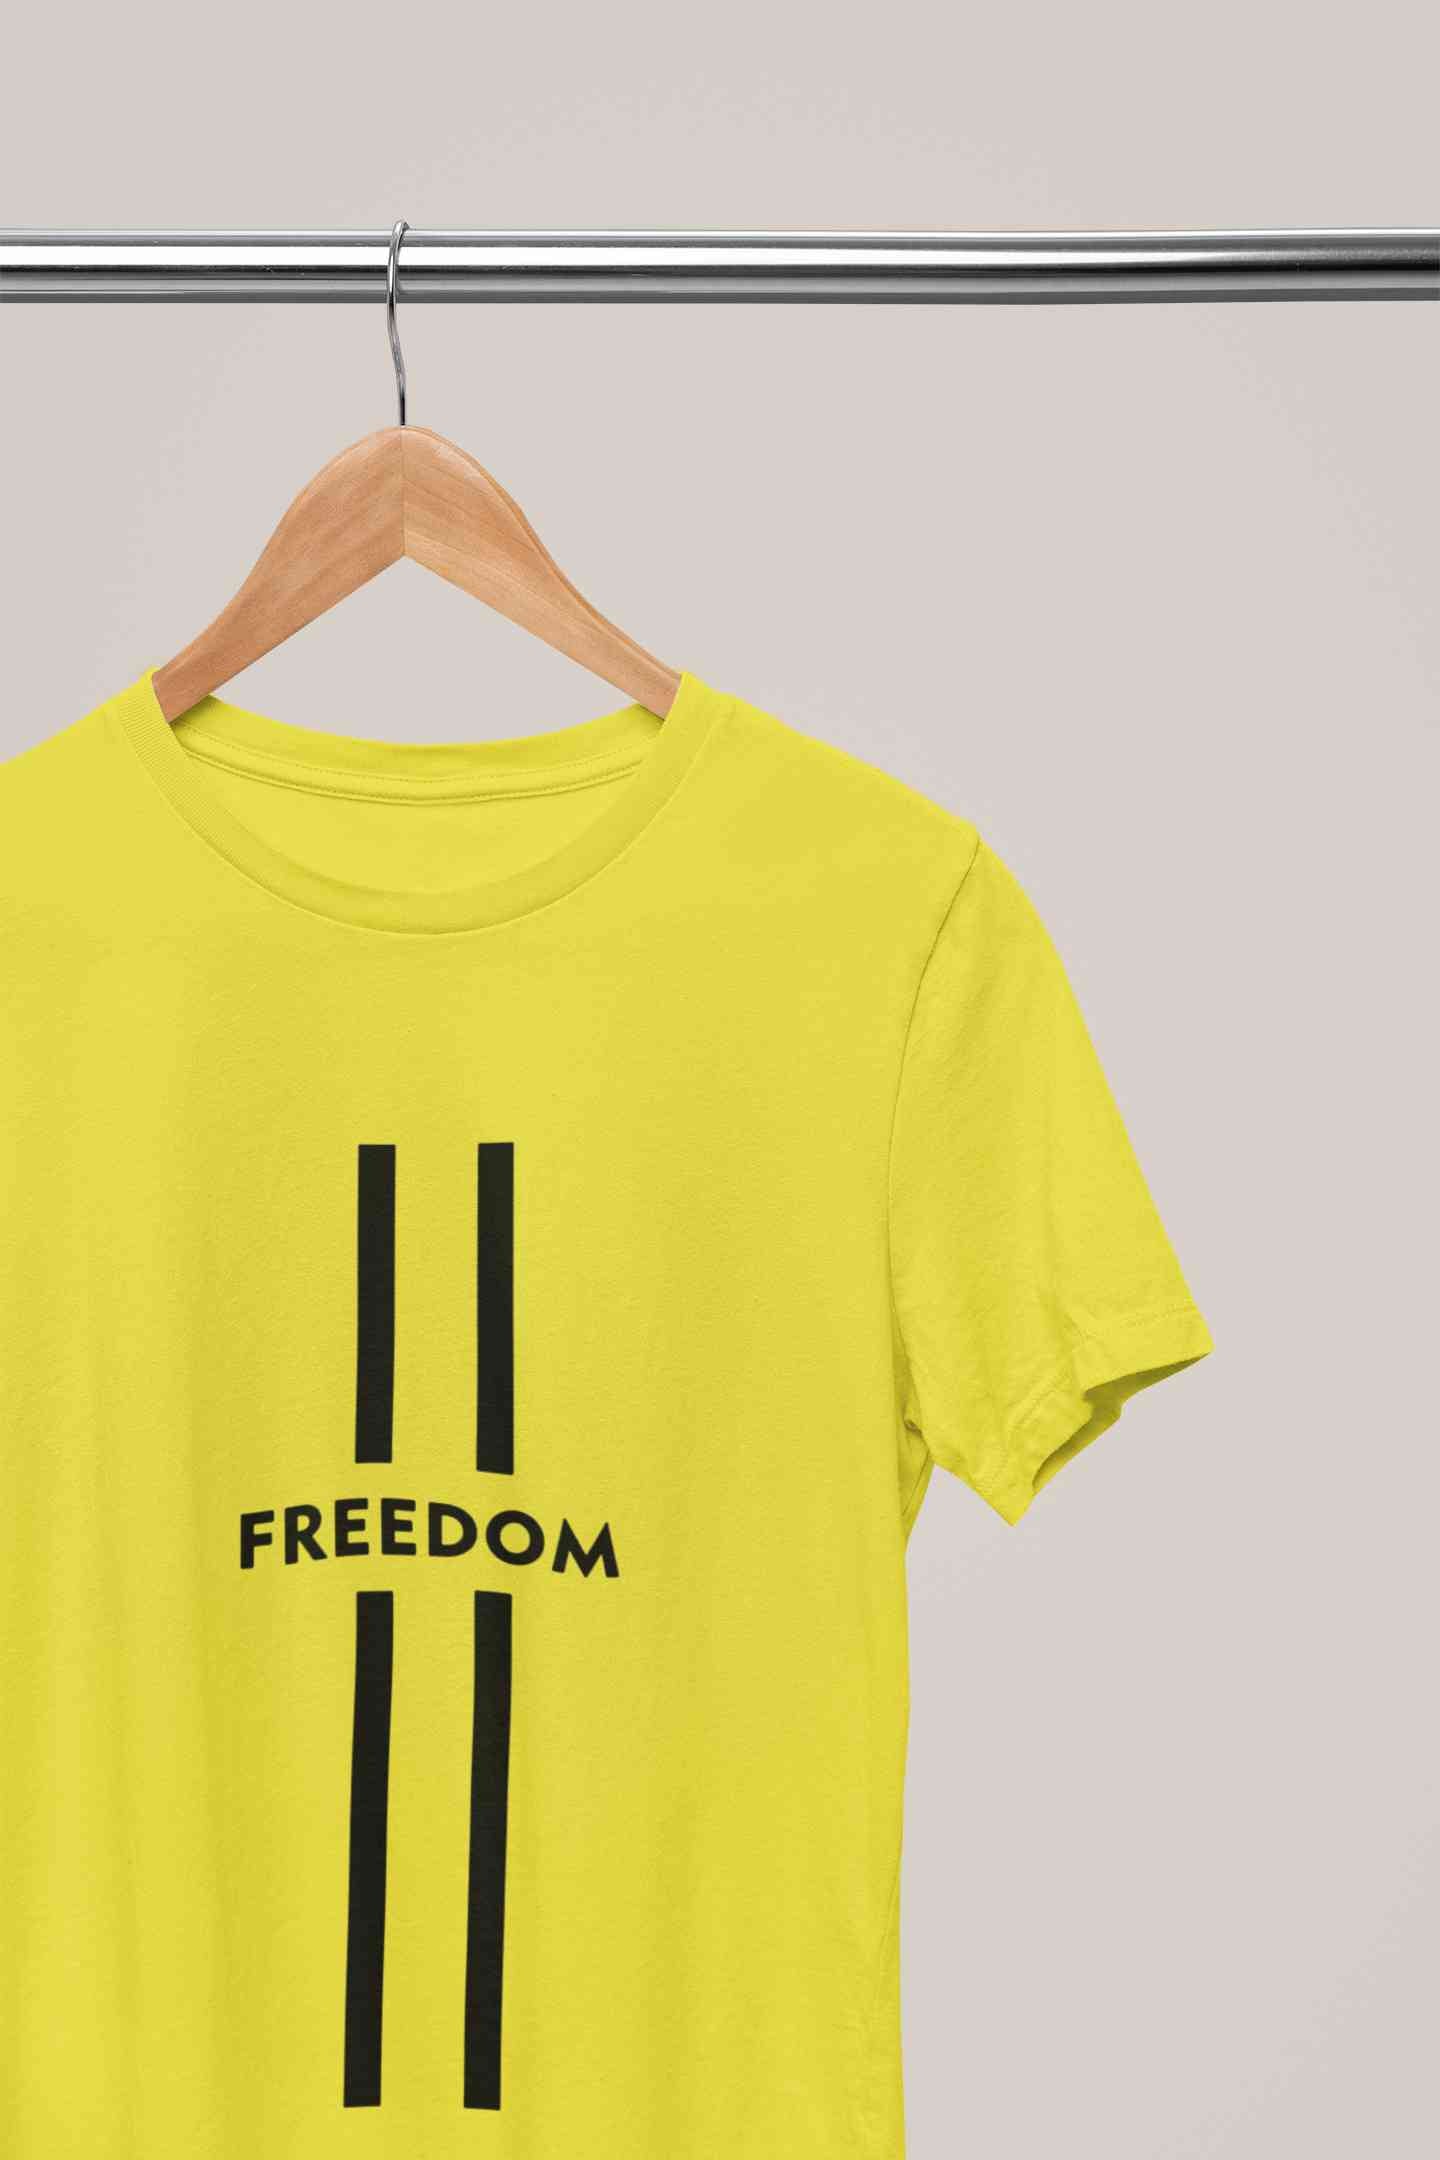 Strip Freedom Mens Half Sleeves T-shirt- FunkyTeesClub